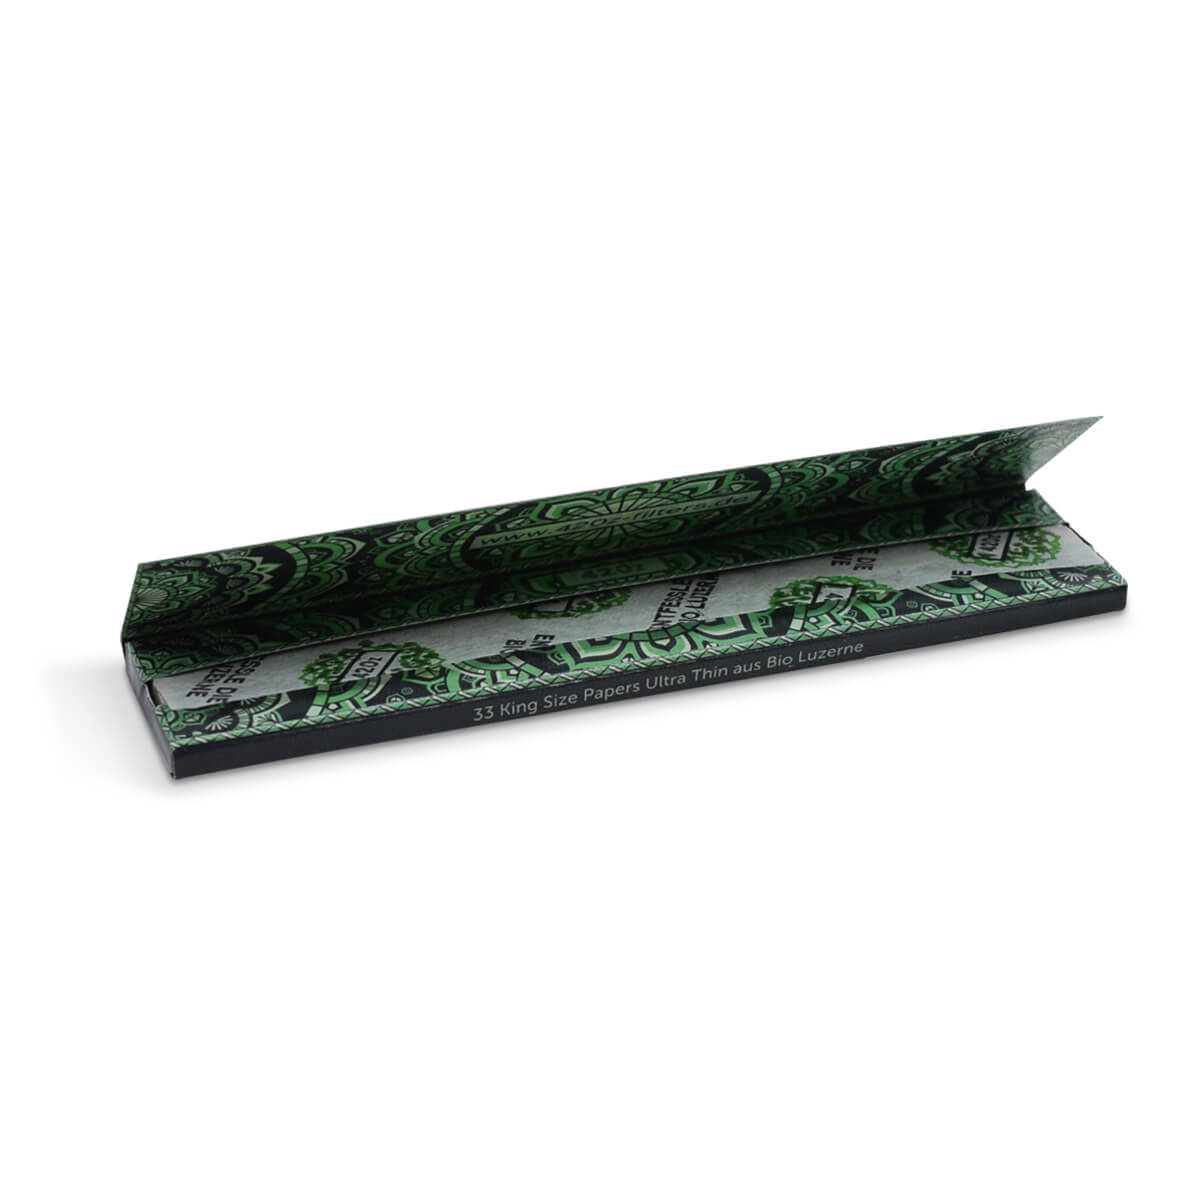 420 Emerald Shine Longpapers - Smokerhontas